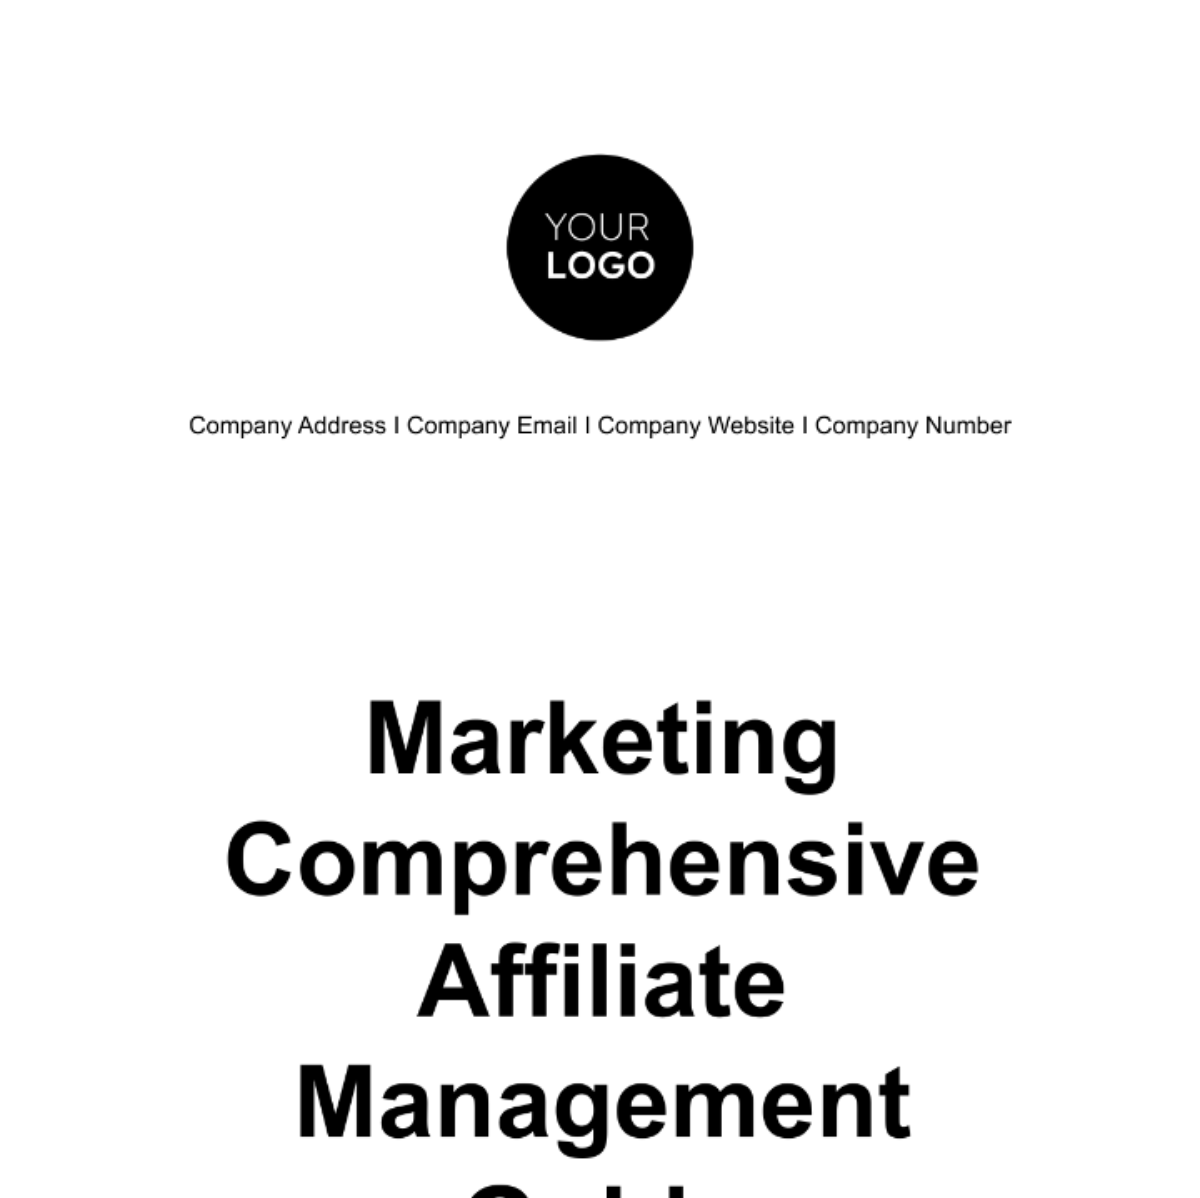 Marketing Comprehensive Affiliate Management Guide Template